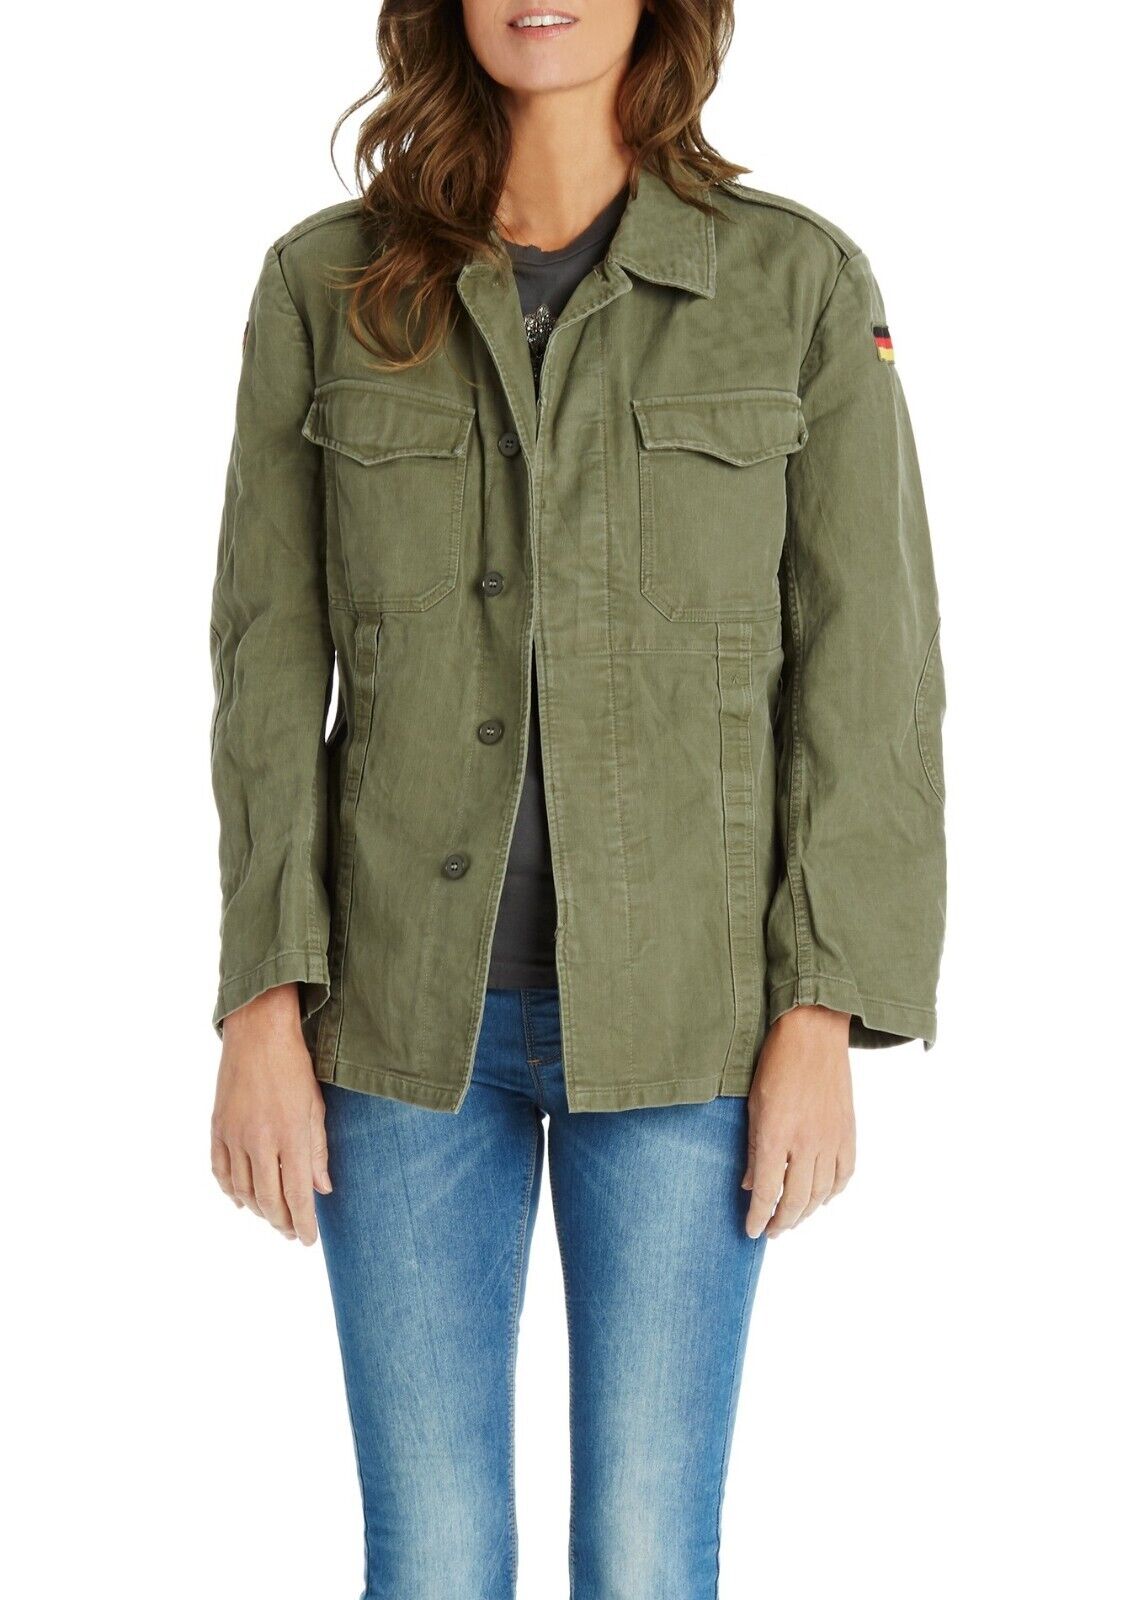 Vintage German army field moleskin shirt jacket coat olive military old type